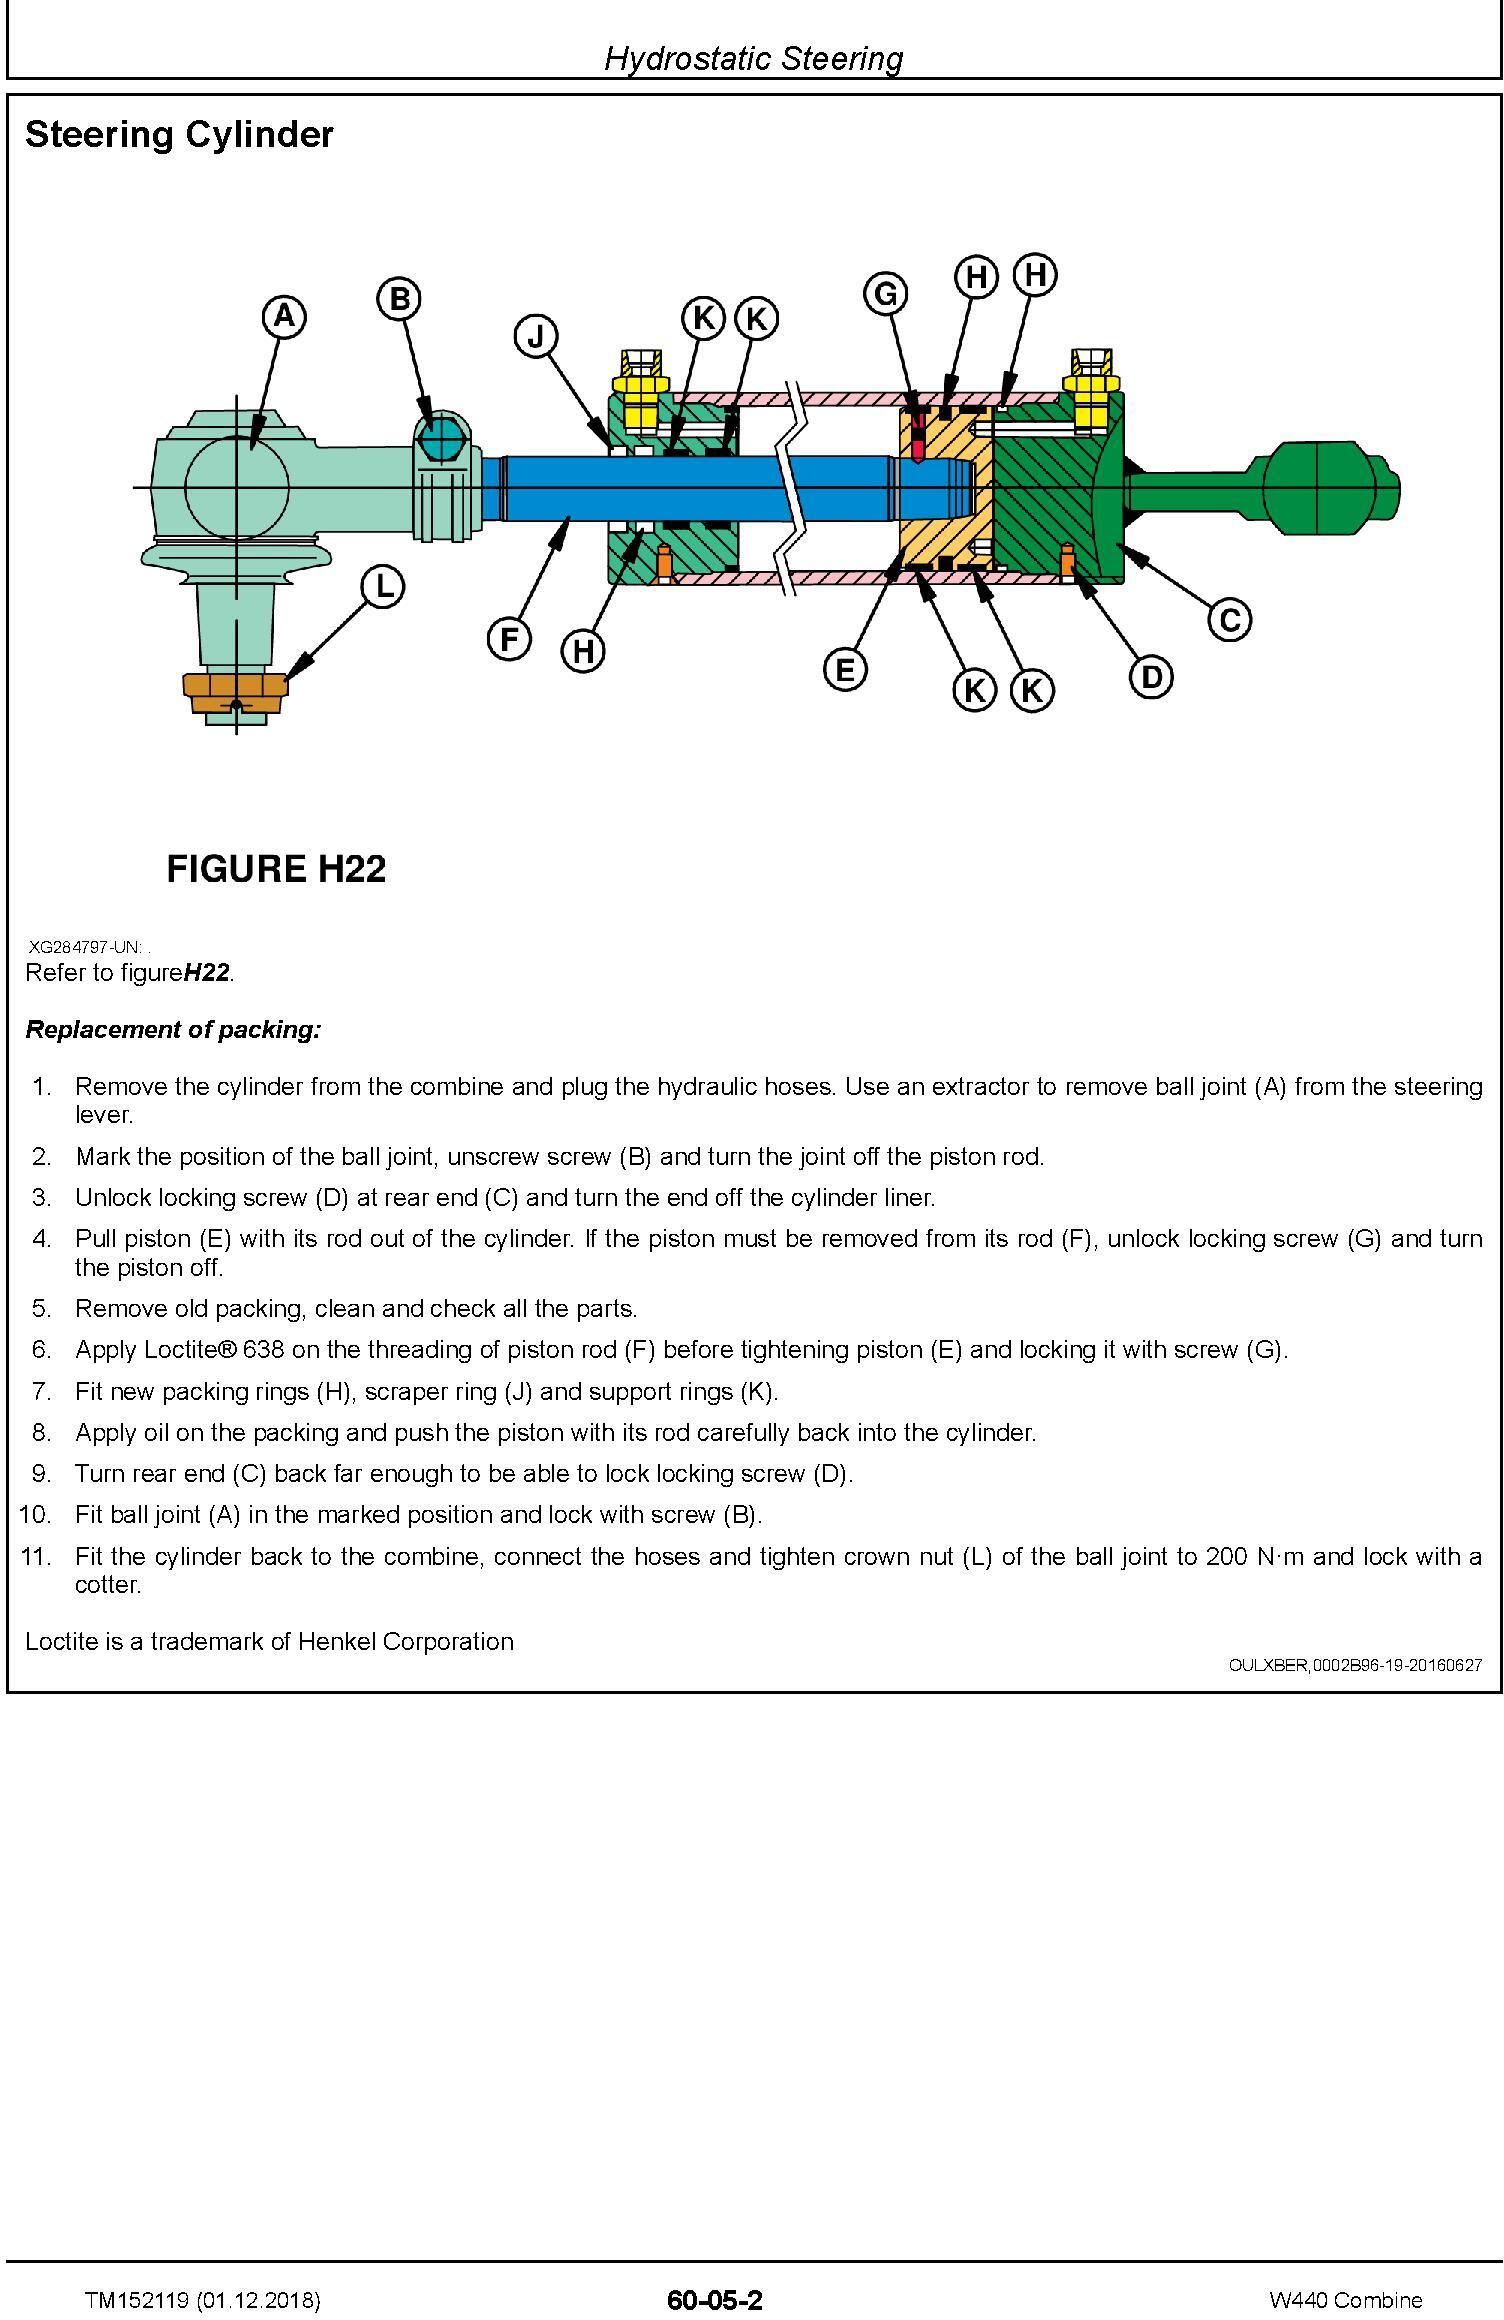 John Deere W440 Combine Technical Manual TM152119_1